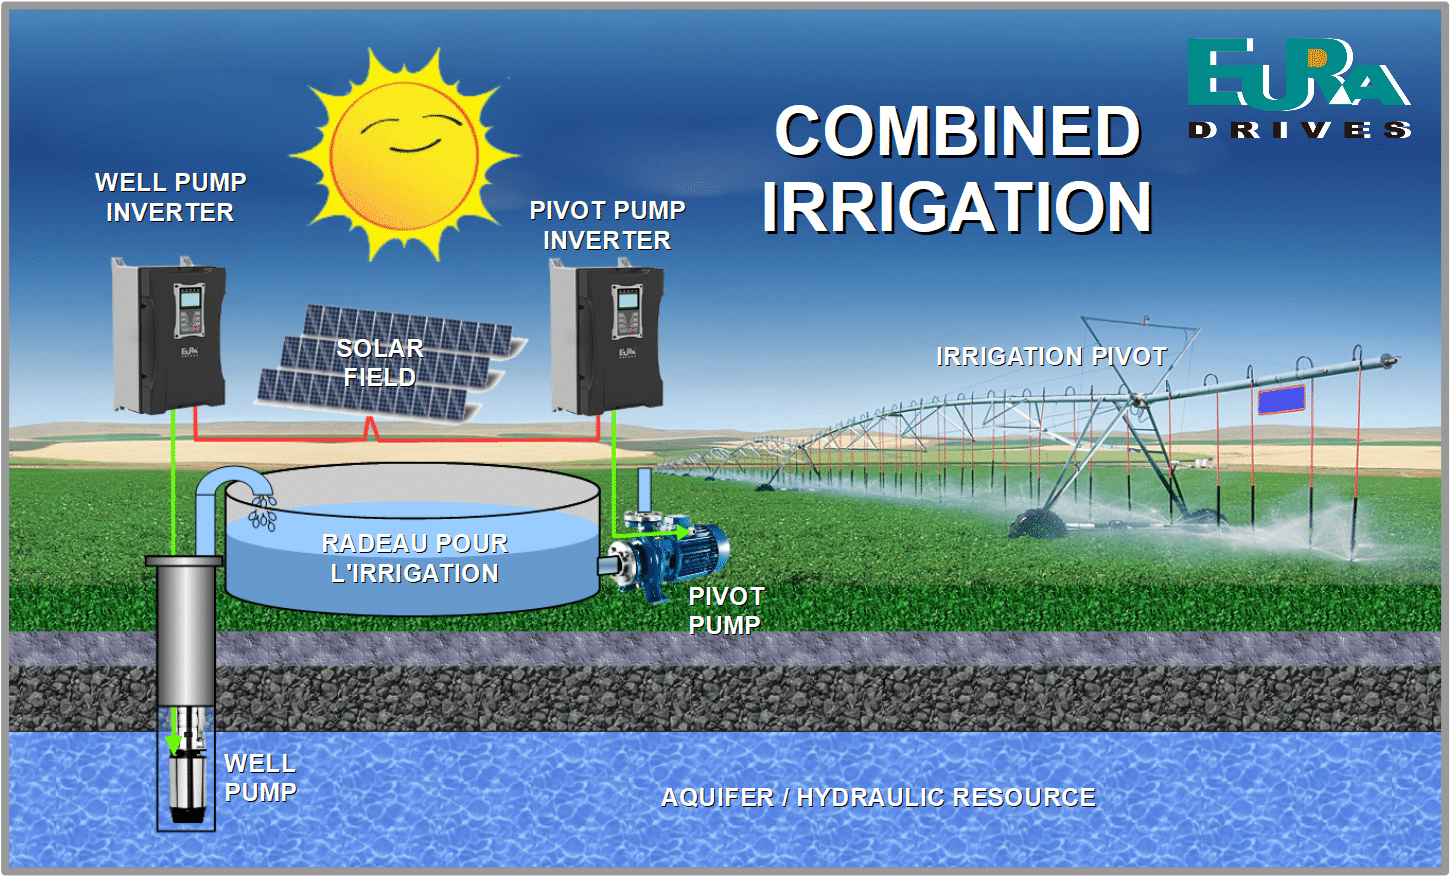 Combined irrigation image